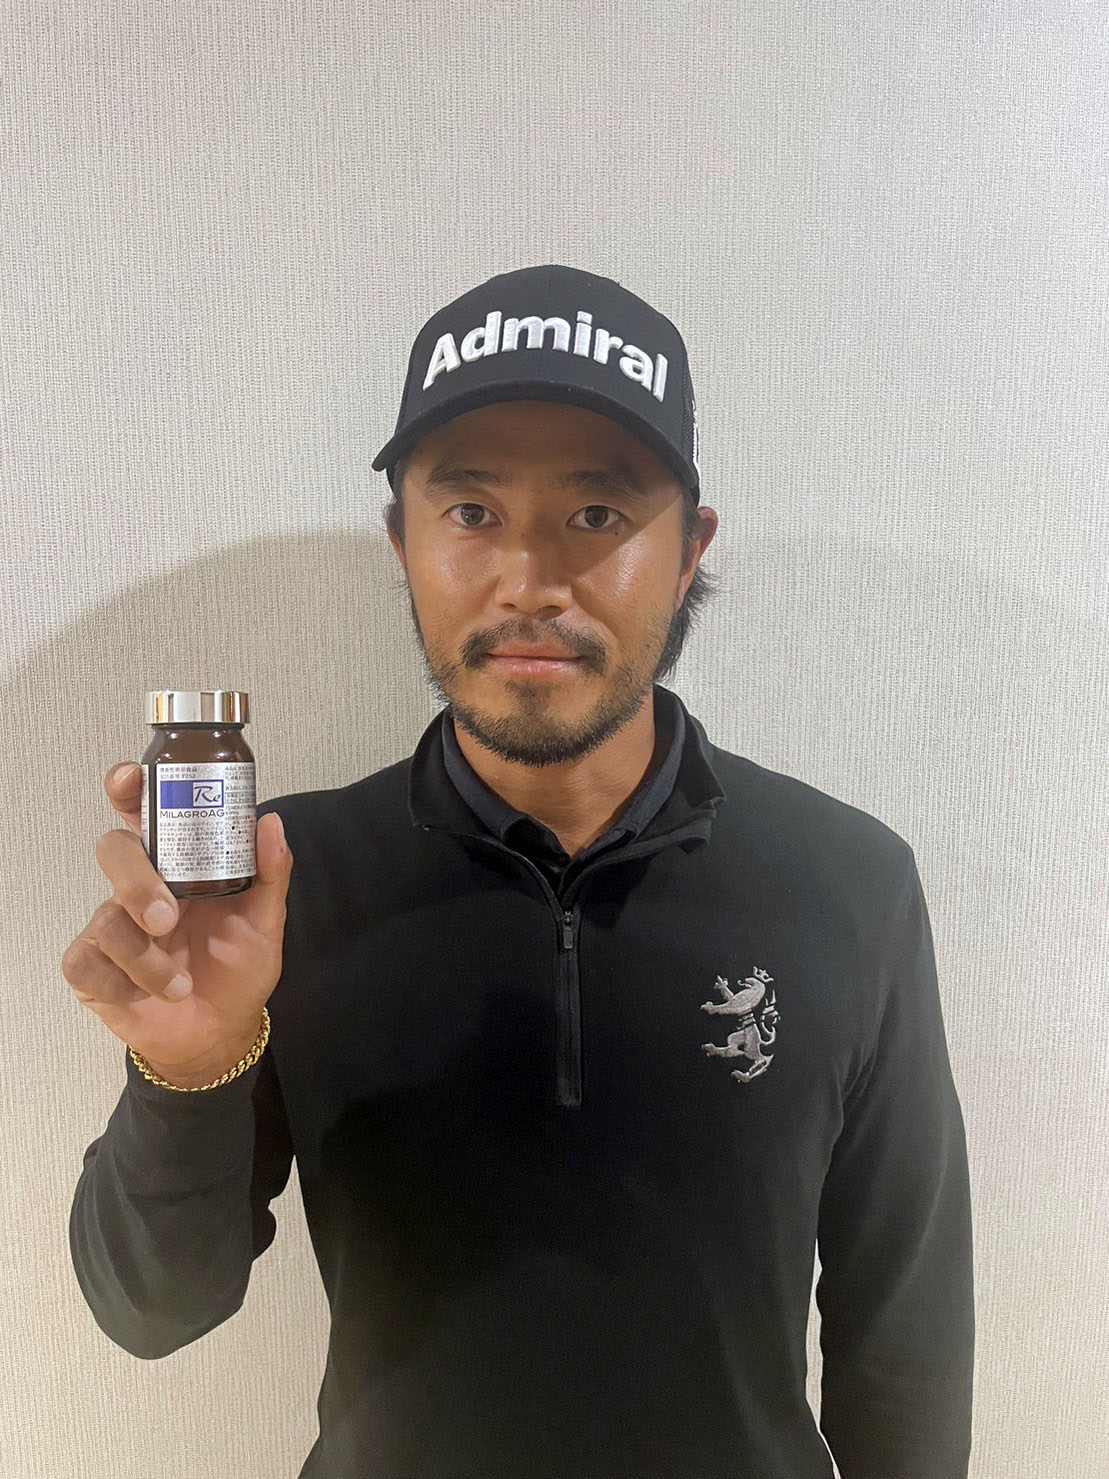 Professional golfer Satoshi Kodaira